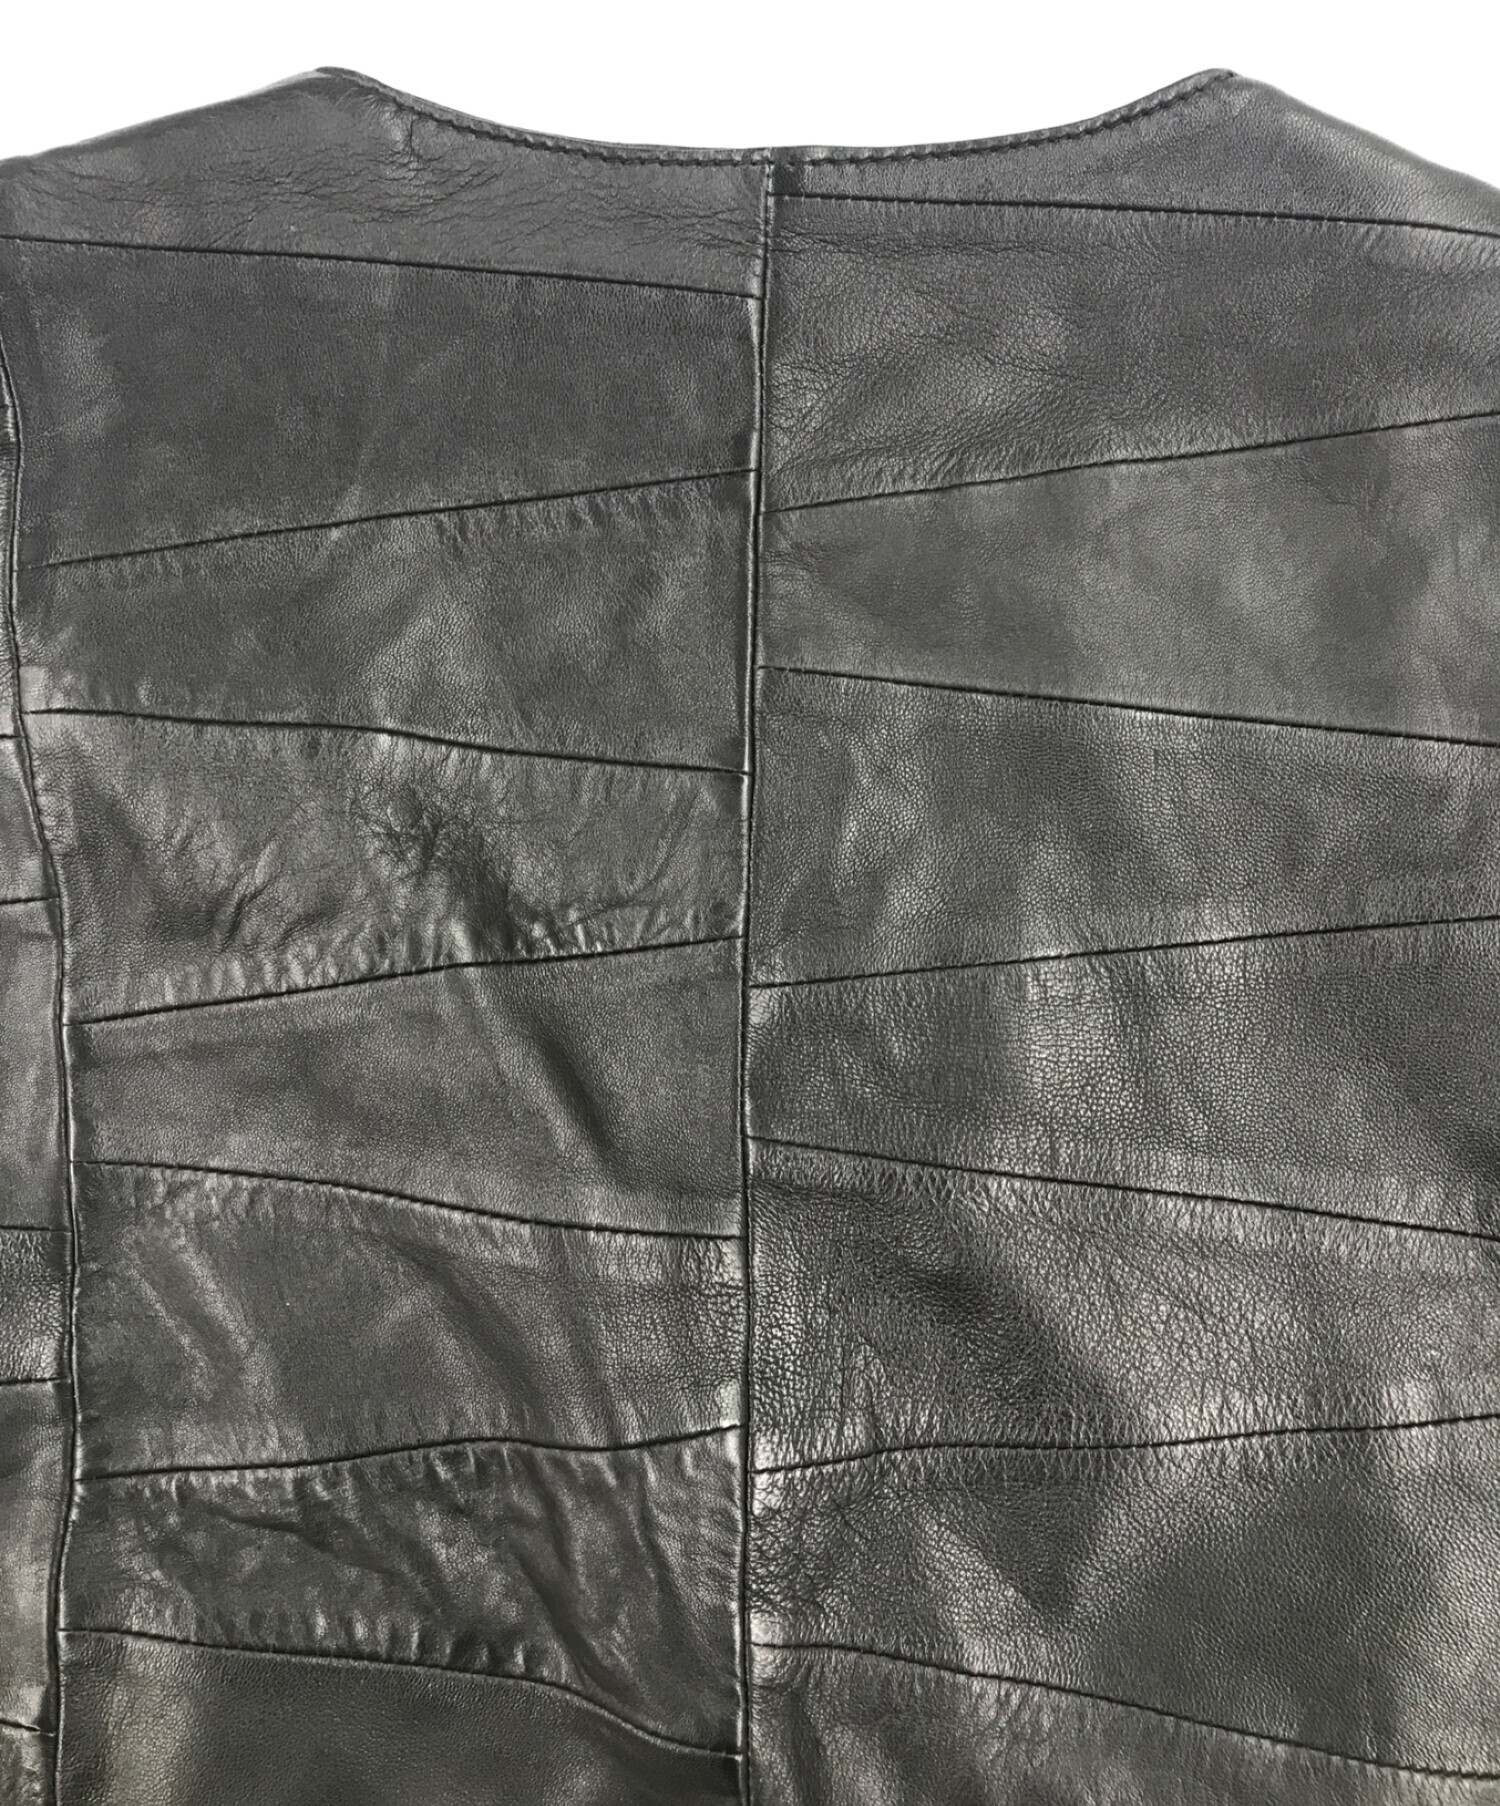 SUPREME (シュプリーム) Patchwork Leather Cargo Vest/パッチワークレザーカーゴベスト ブラック サイズ:M